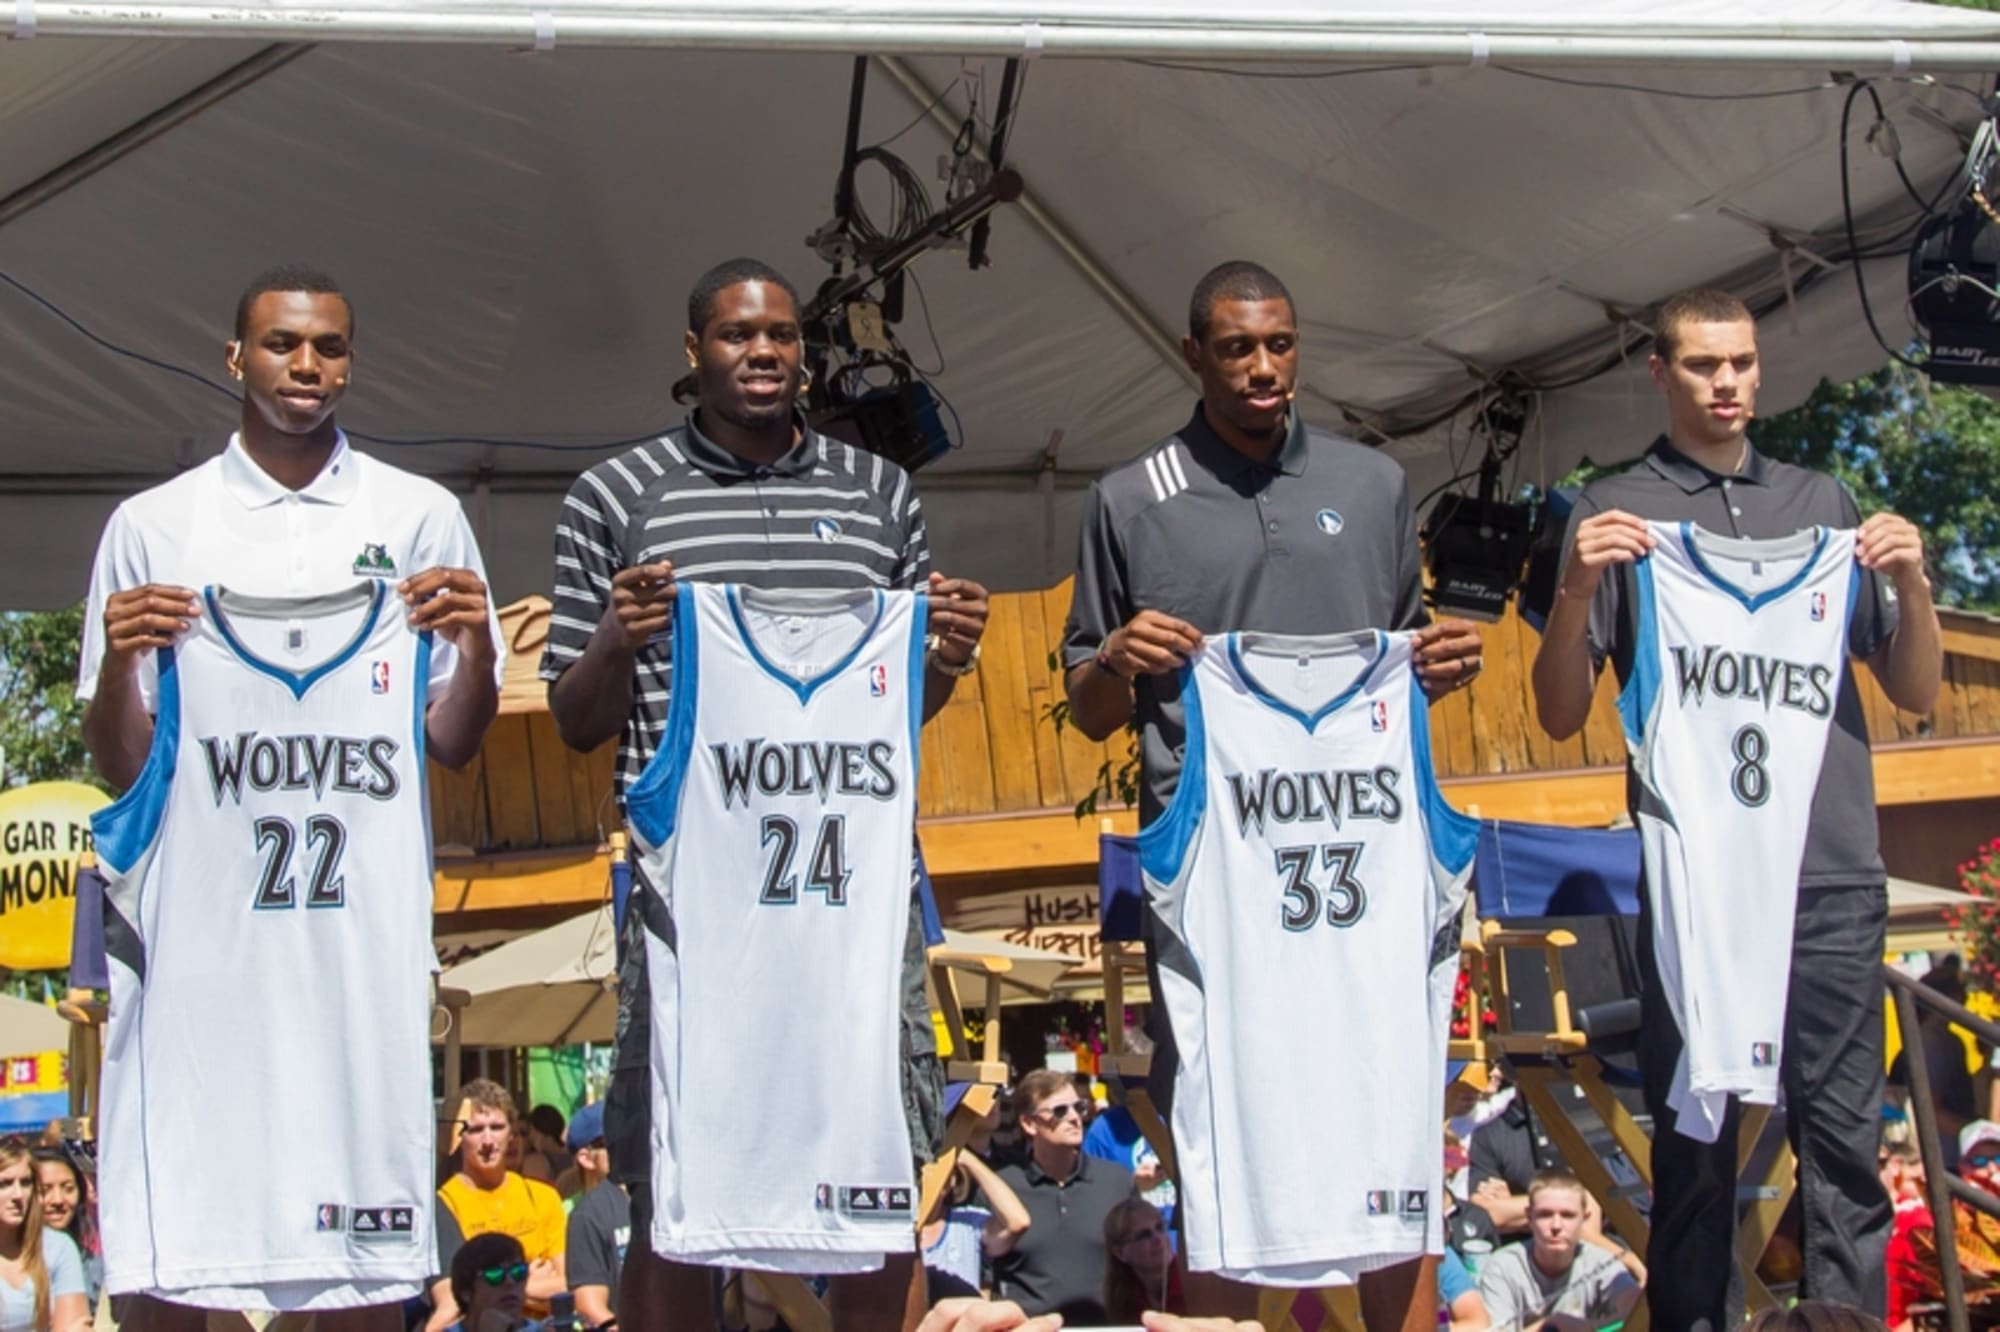 NBA Draft 2014: Discussing UCLA's Zach LaVine - Orlando Pinstriped Post